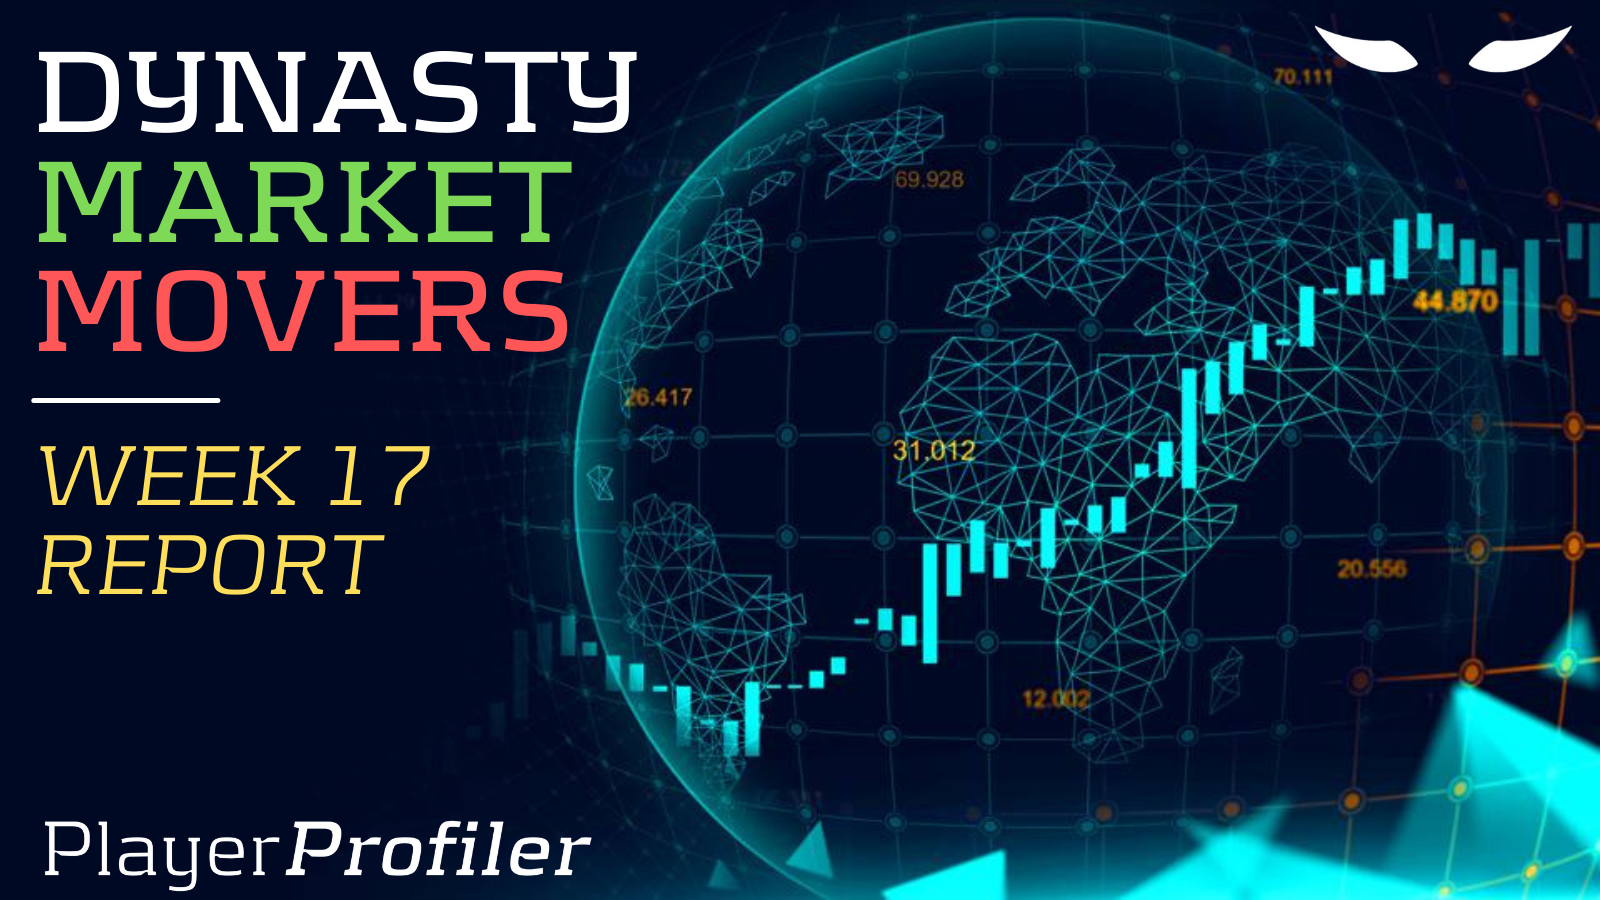 dynasty market movers week 17